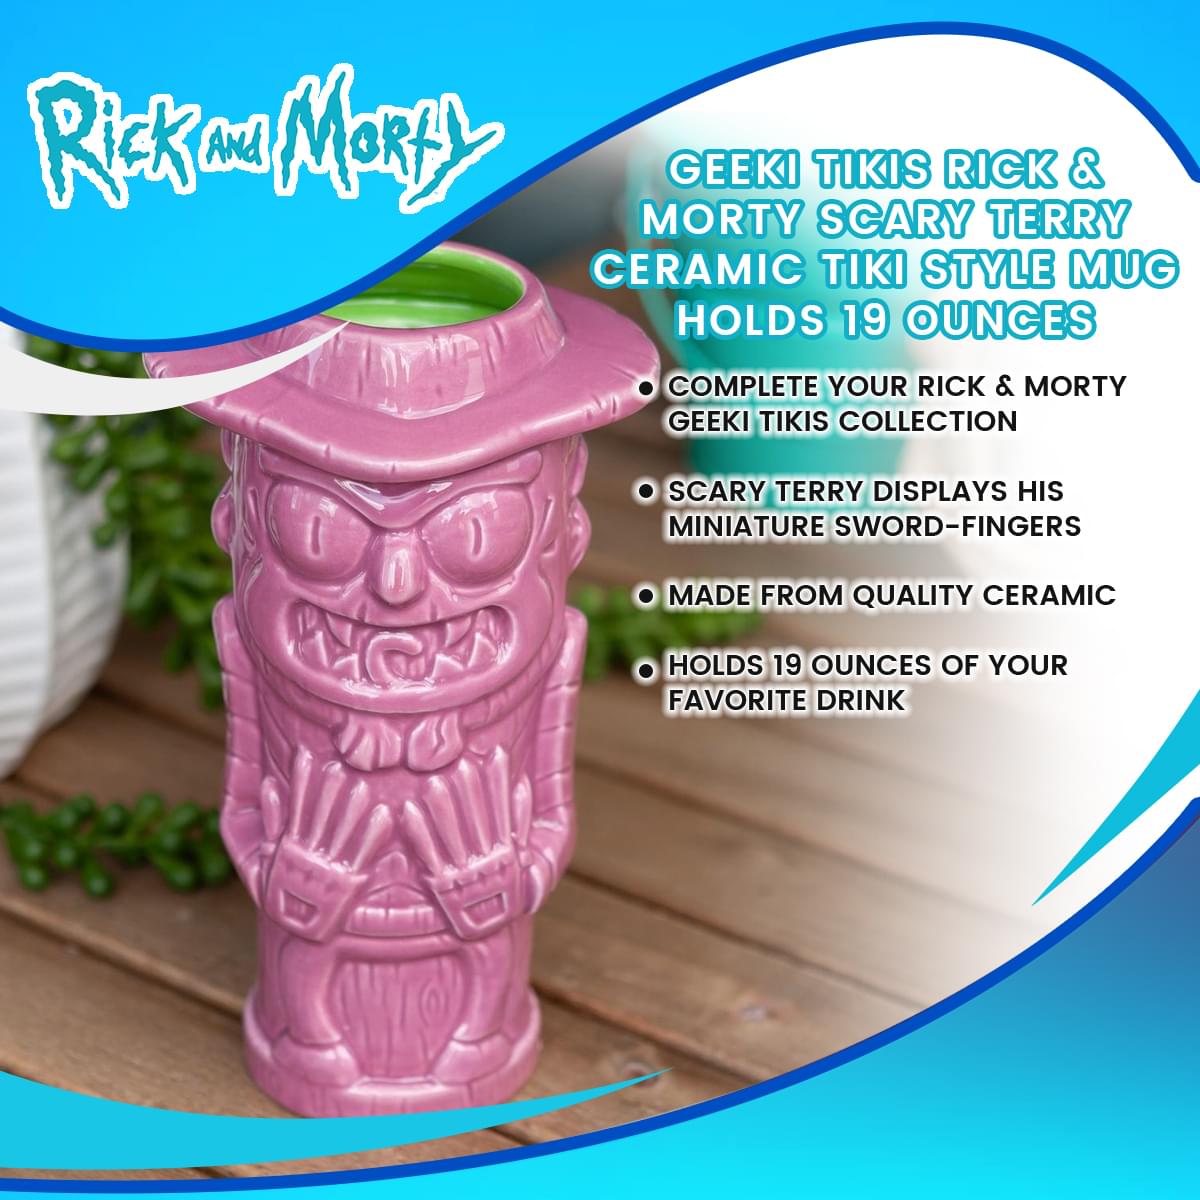 Geeki Tikis Rick & Morty Scary Terry | Ceramic Tiki Style Mug | Holds 19 Ounces